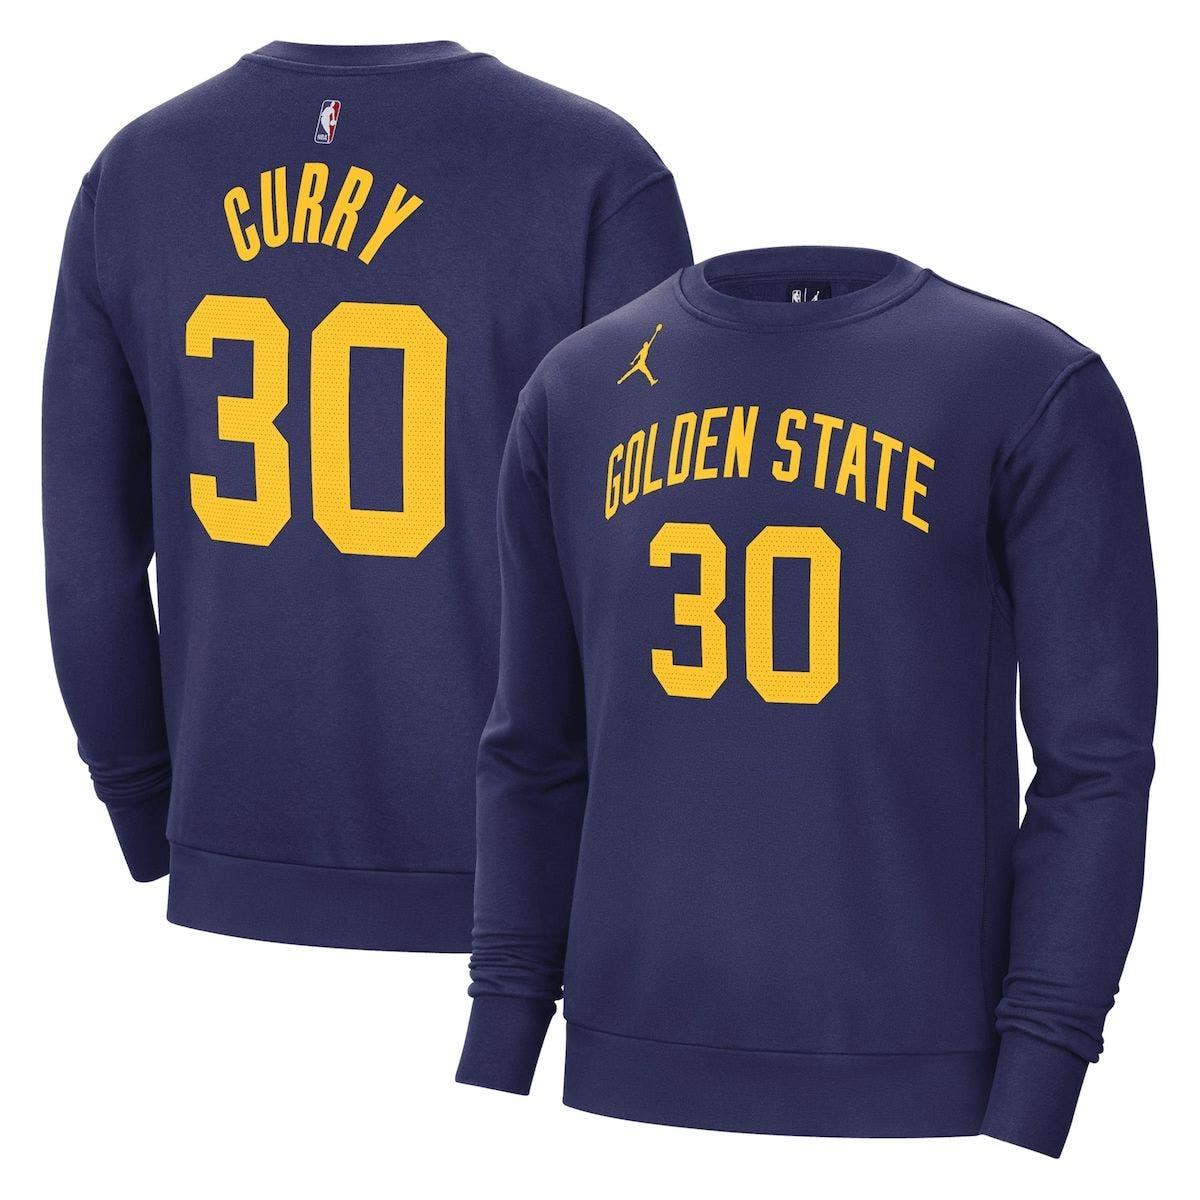 Nike Men's Golden State Warriors Blue Fleece Pullover Hoodie, Medium